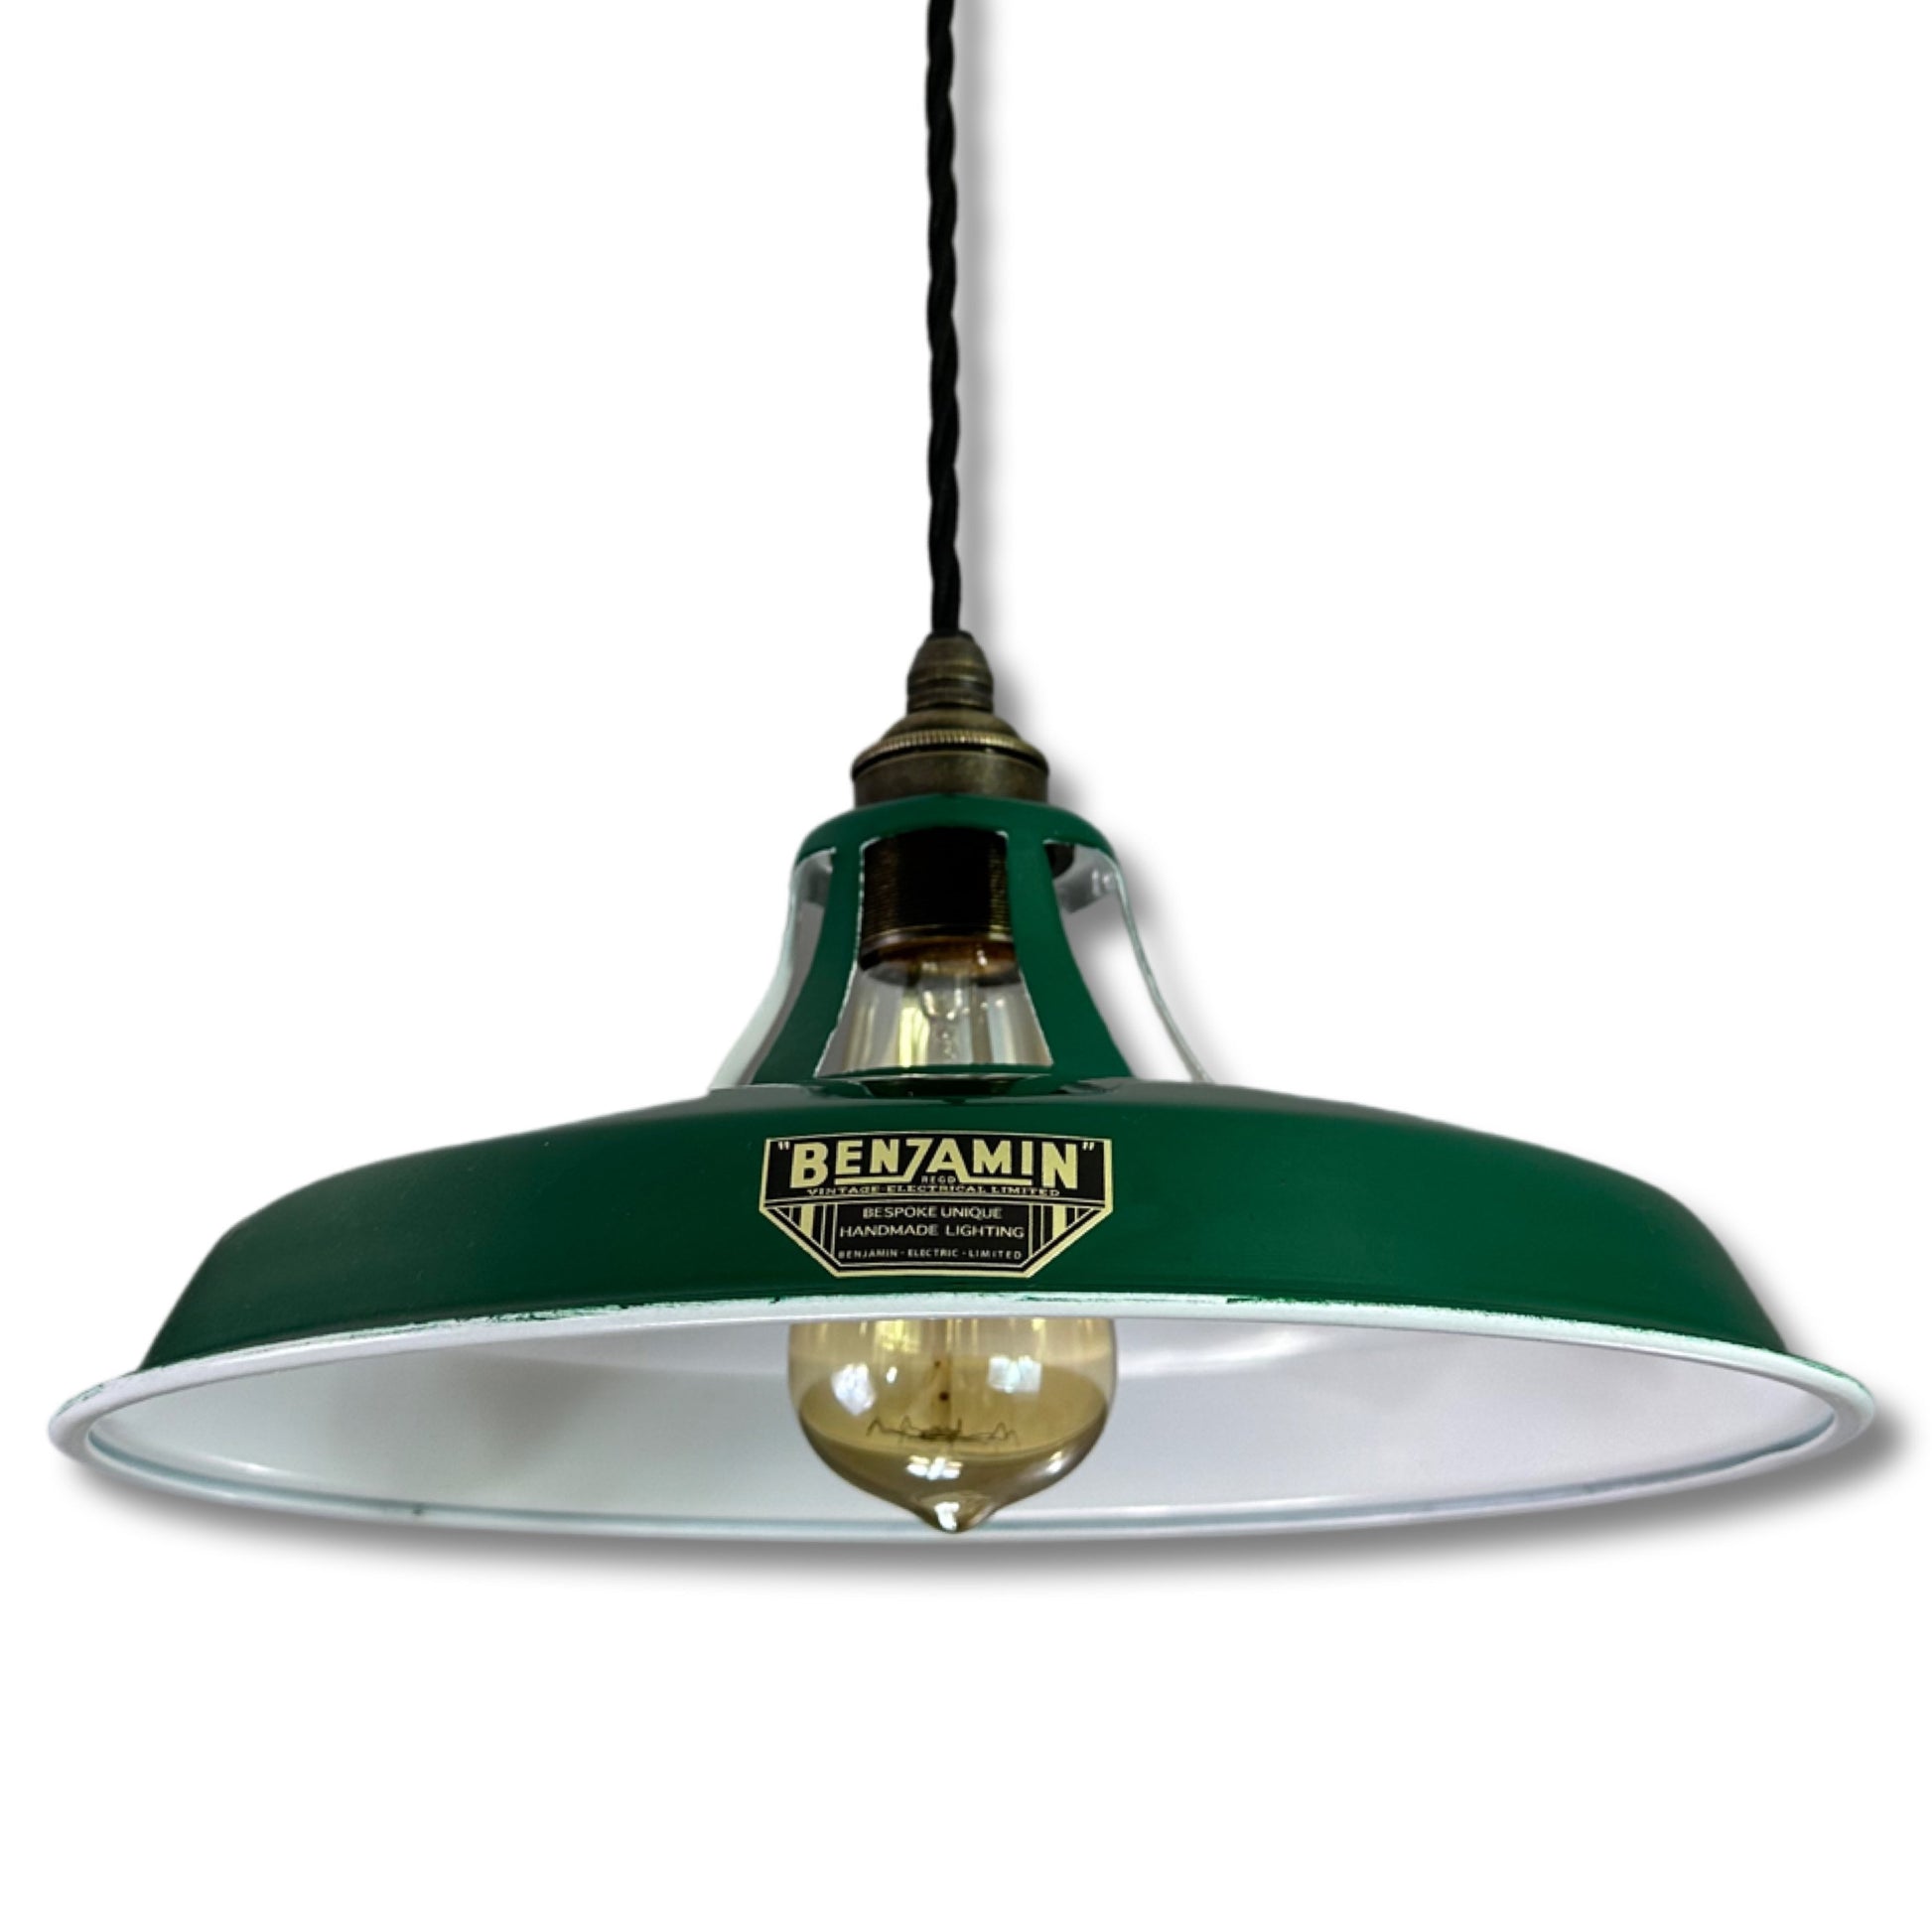 Bramerton ~ Racing Green Benflux Industrial Shade 1926 Design Pendant Set Light | Ceiling Dining Room | Kitchen Table | Vintage